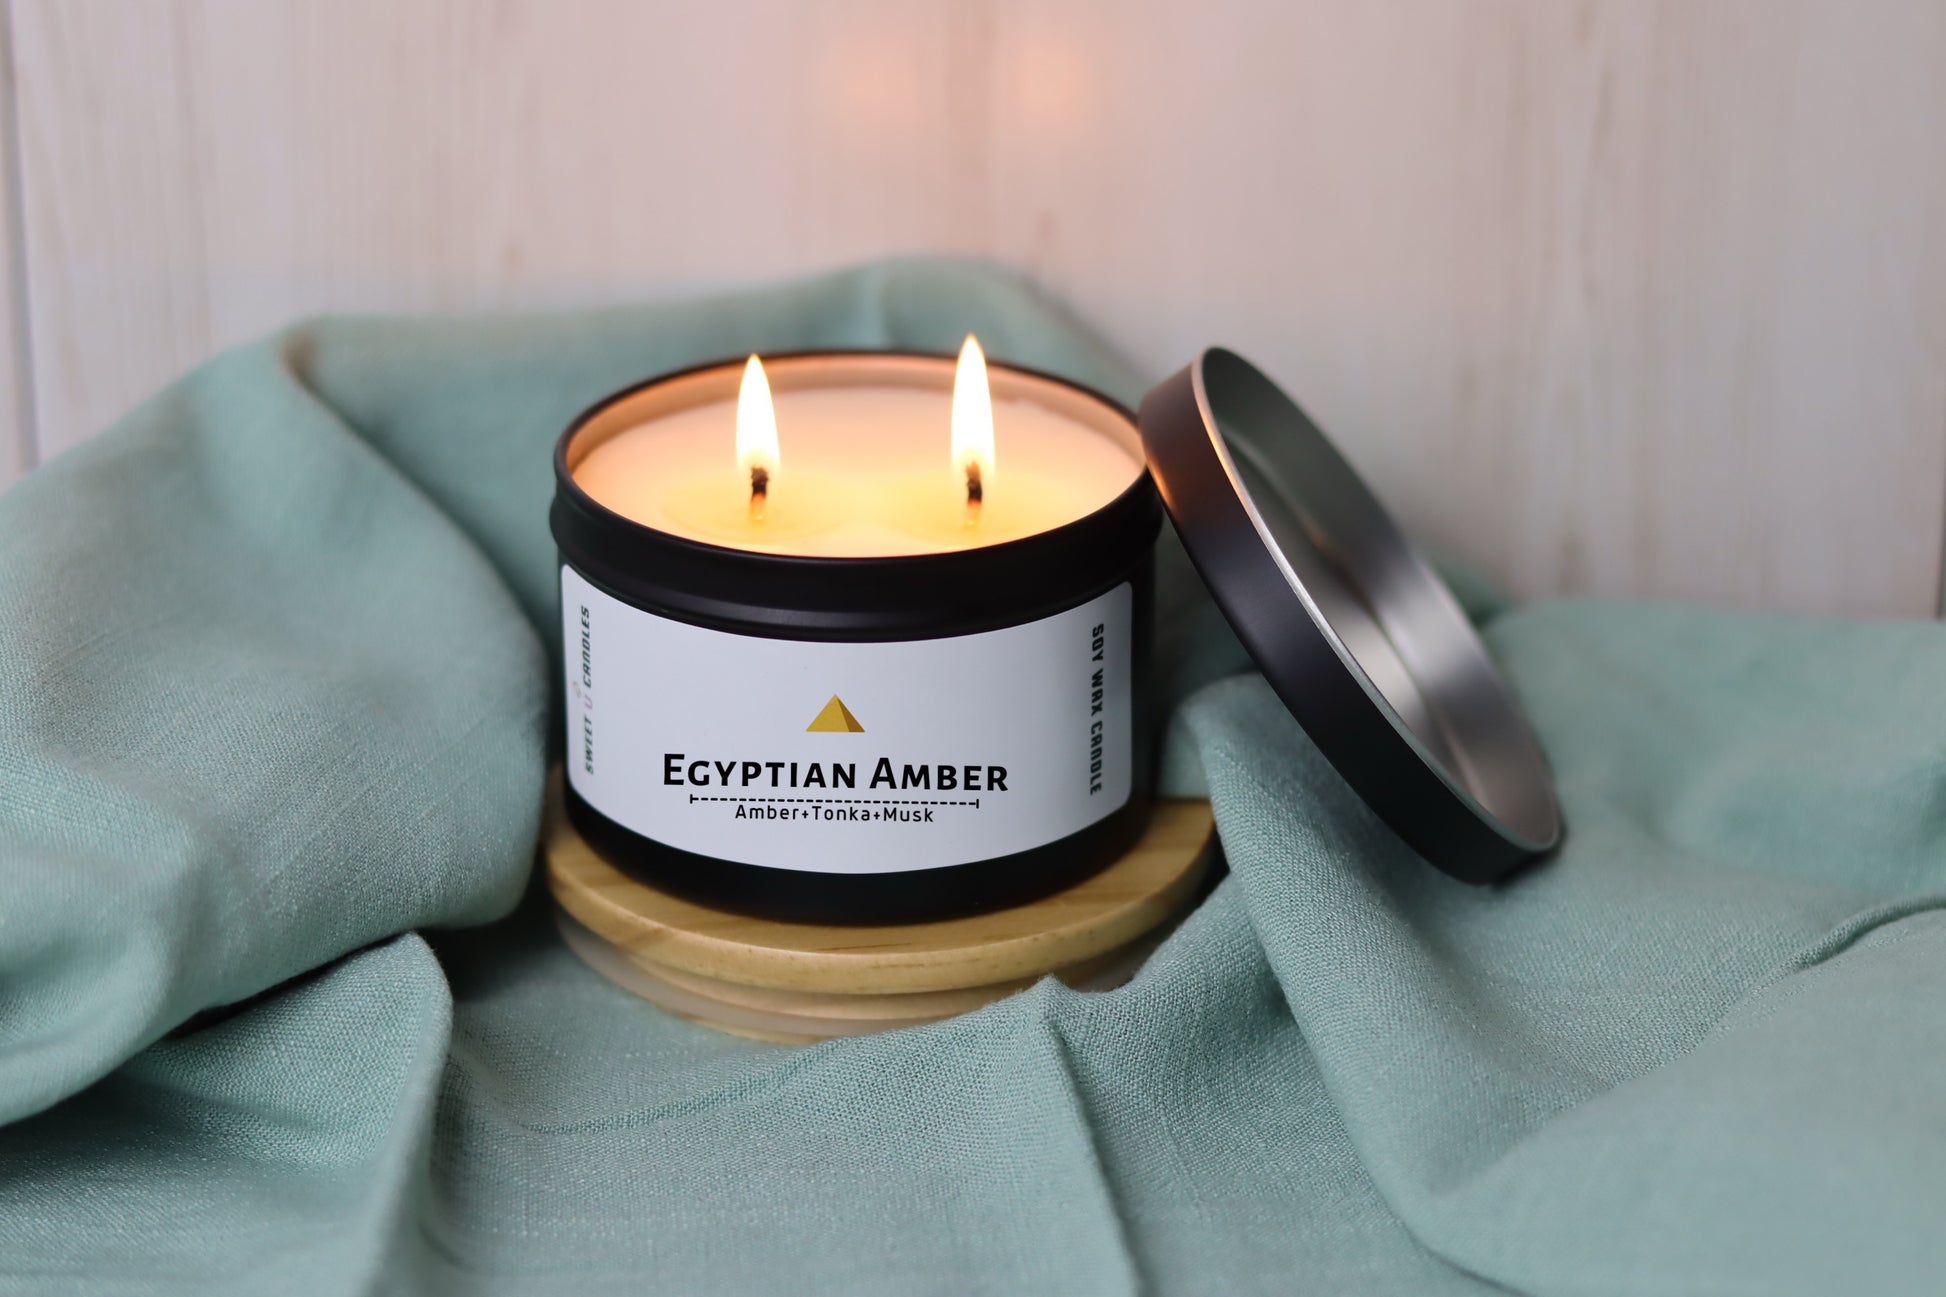 EGYPTIAN AMBER - Sweet U Candles 